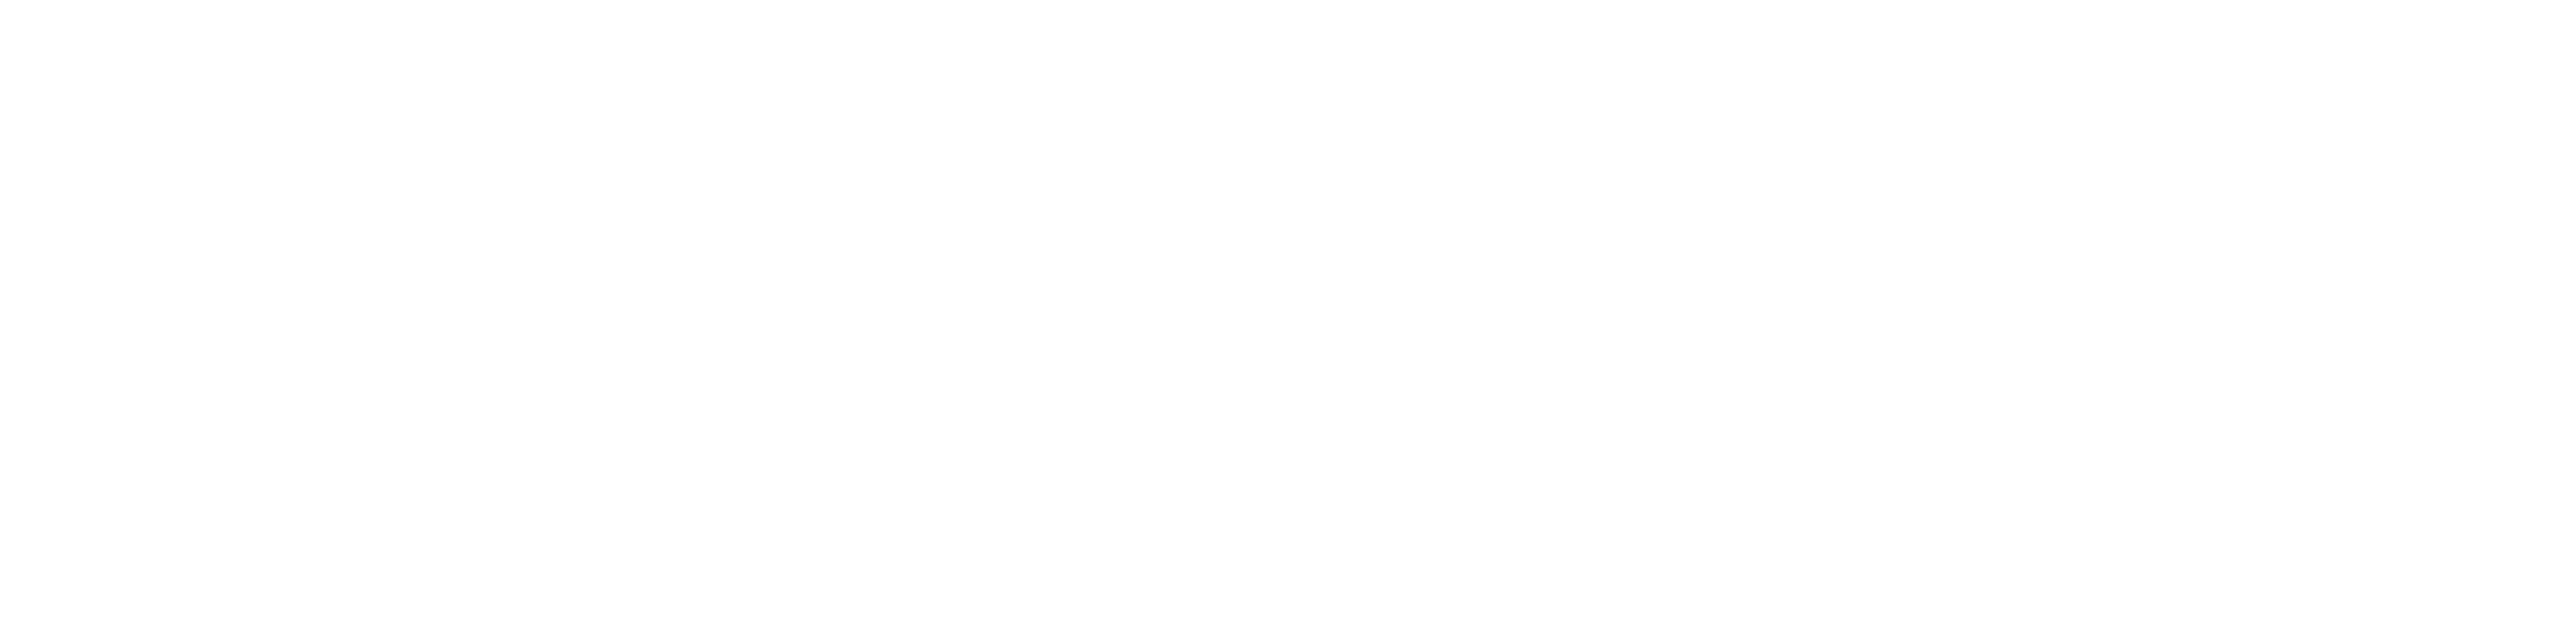 Båstad Tourismus & Business Negatives Logo-42